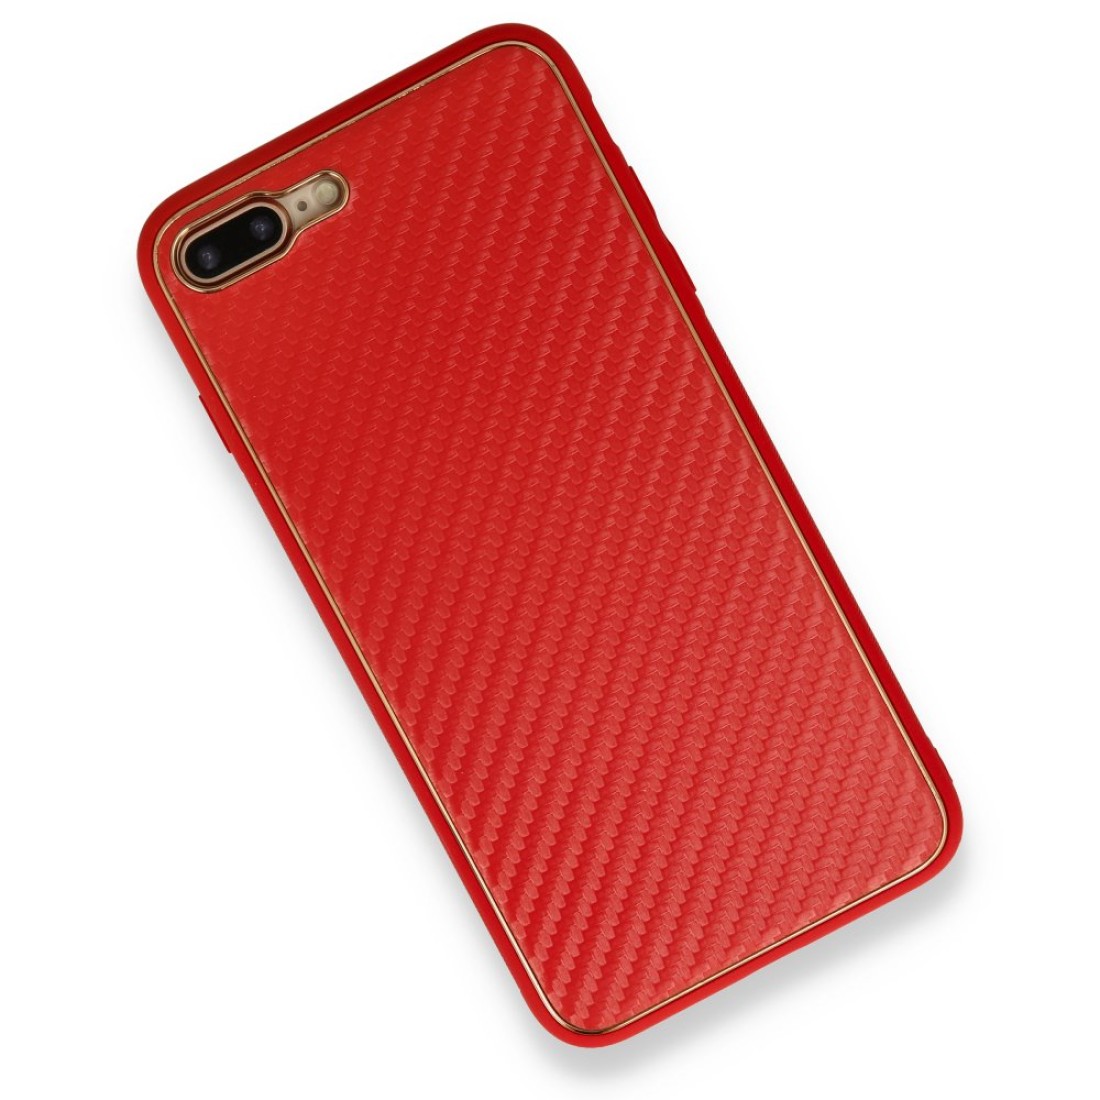 Apple iPhone 7 Plus Kılıf Coco Karbon Silikon - Kırmızı